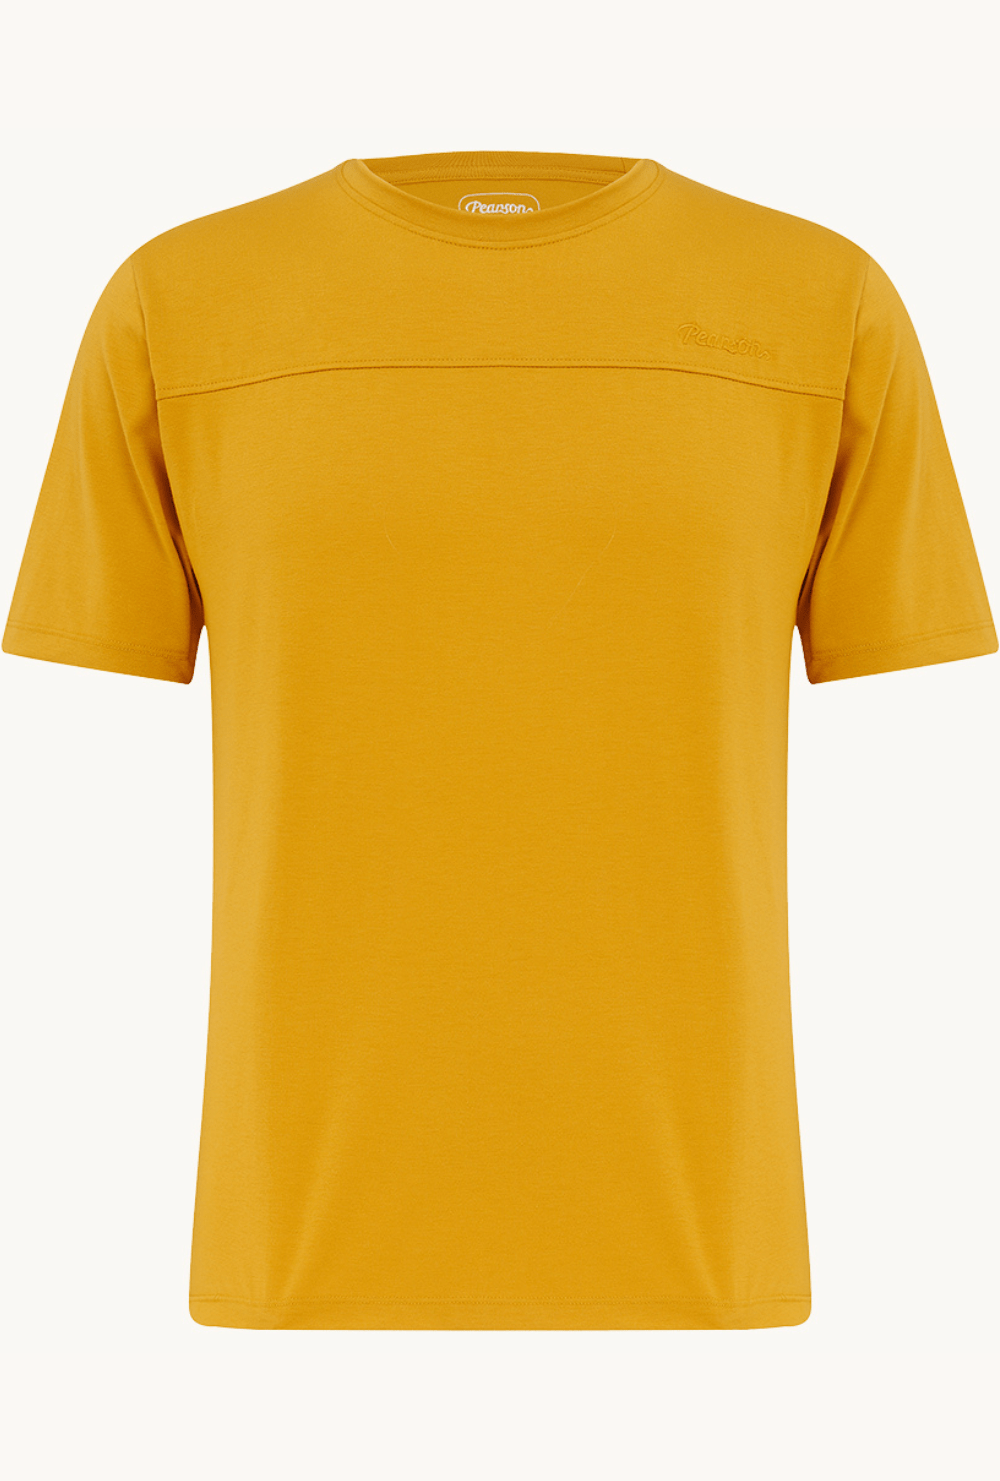 Pearson 1860  High DaysandHolidays - Cycling T-shirt Ochre  Ochre / X-large